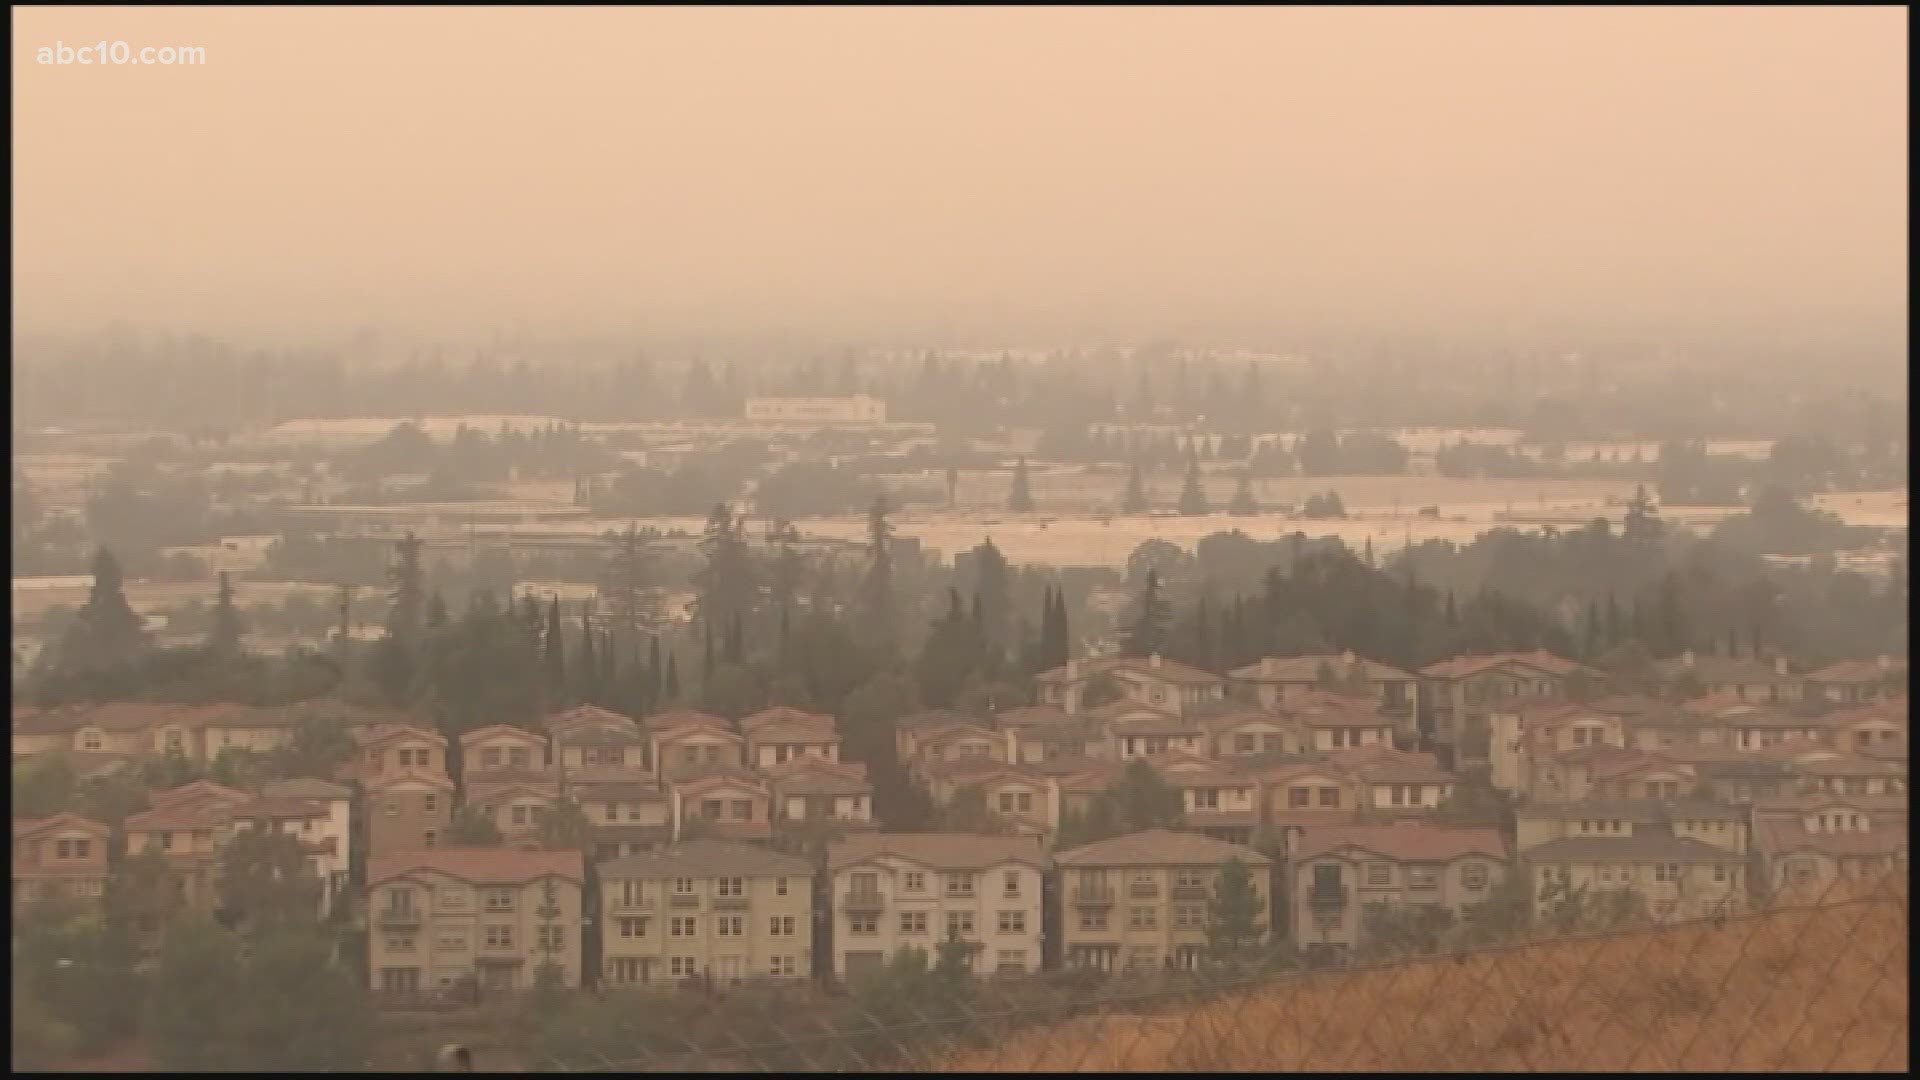 Its wildfire season and smoke makes you feel sick.. UC Davis Dr. says stay inside.